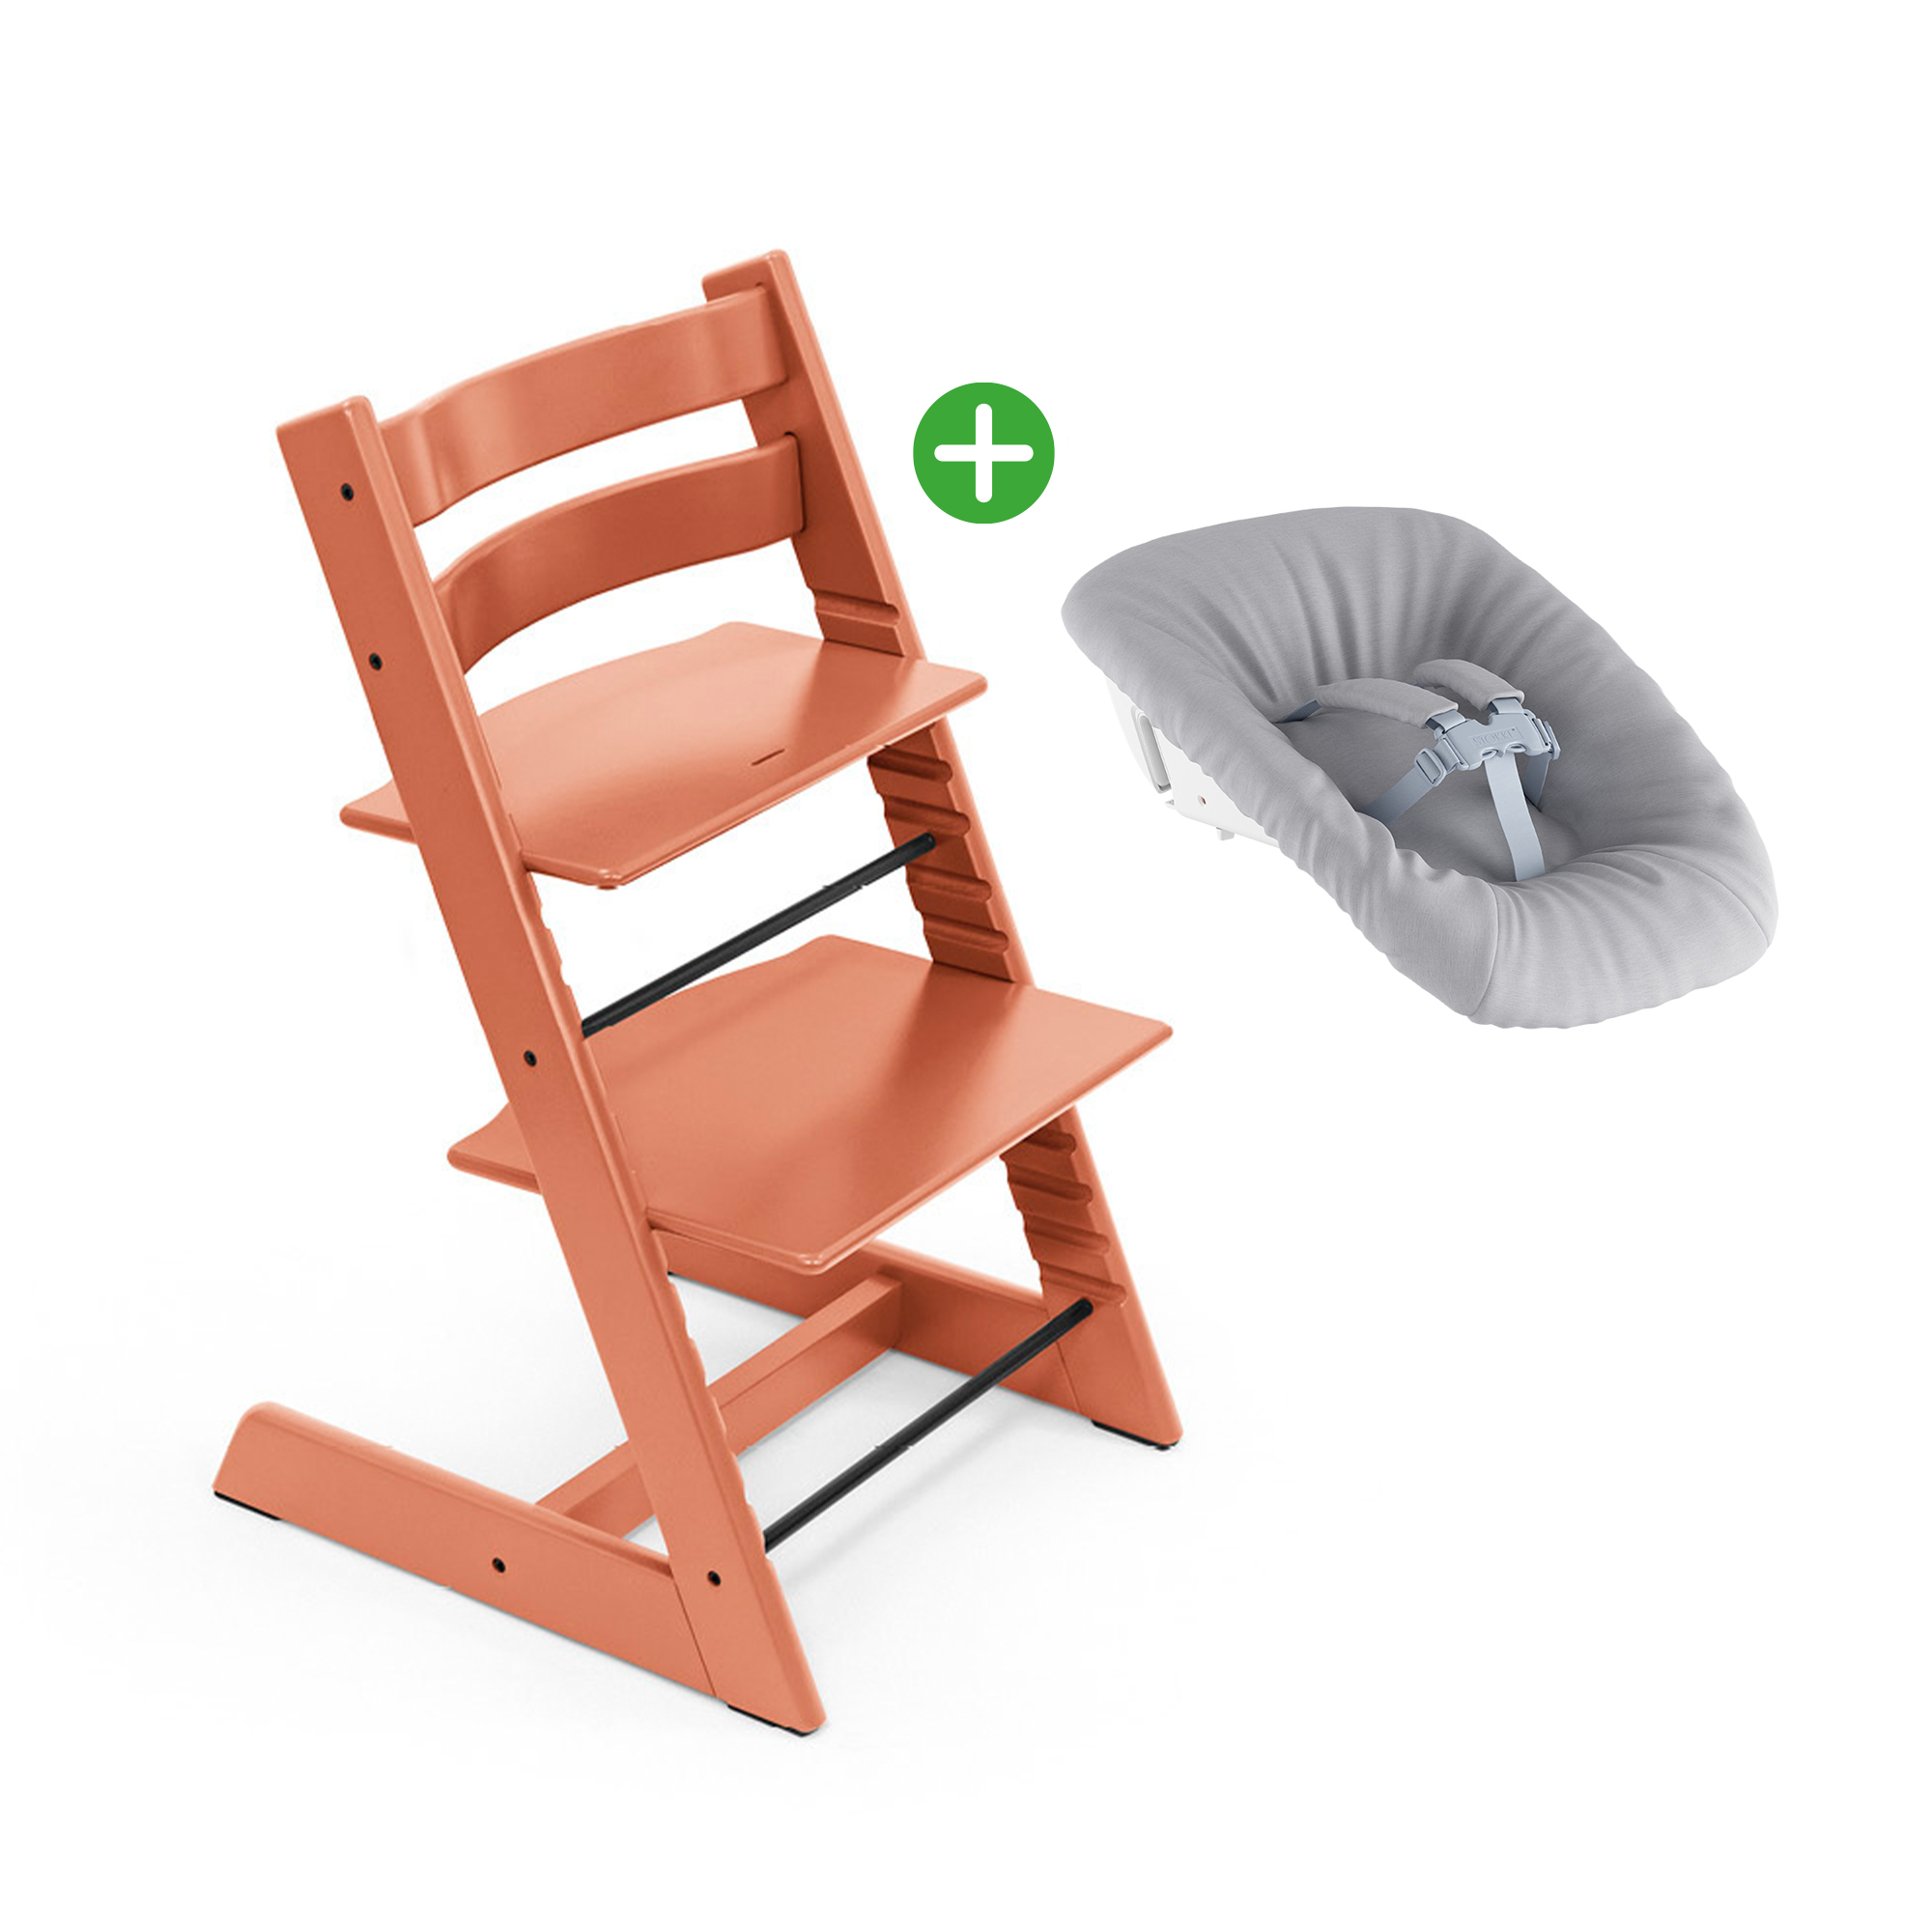 Set Tripp Trapp® Terracotta mit Newborn Set STOKKE Orange 9000000000678 1